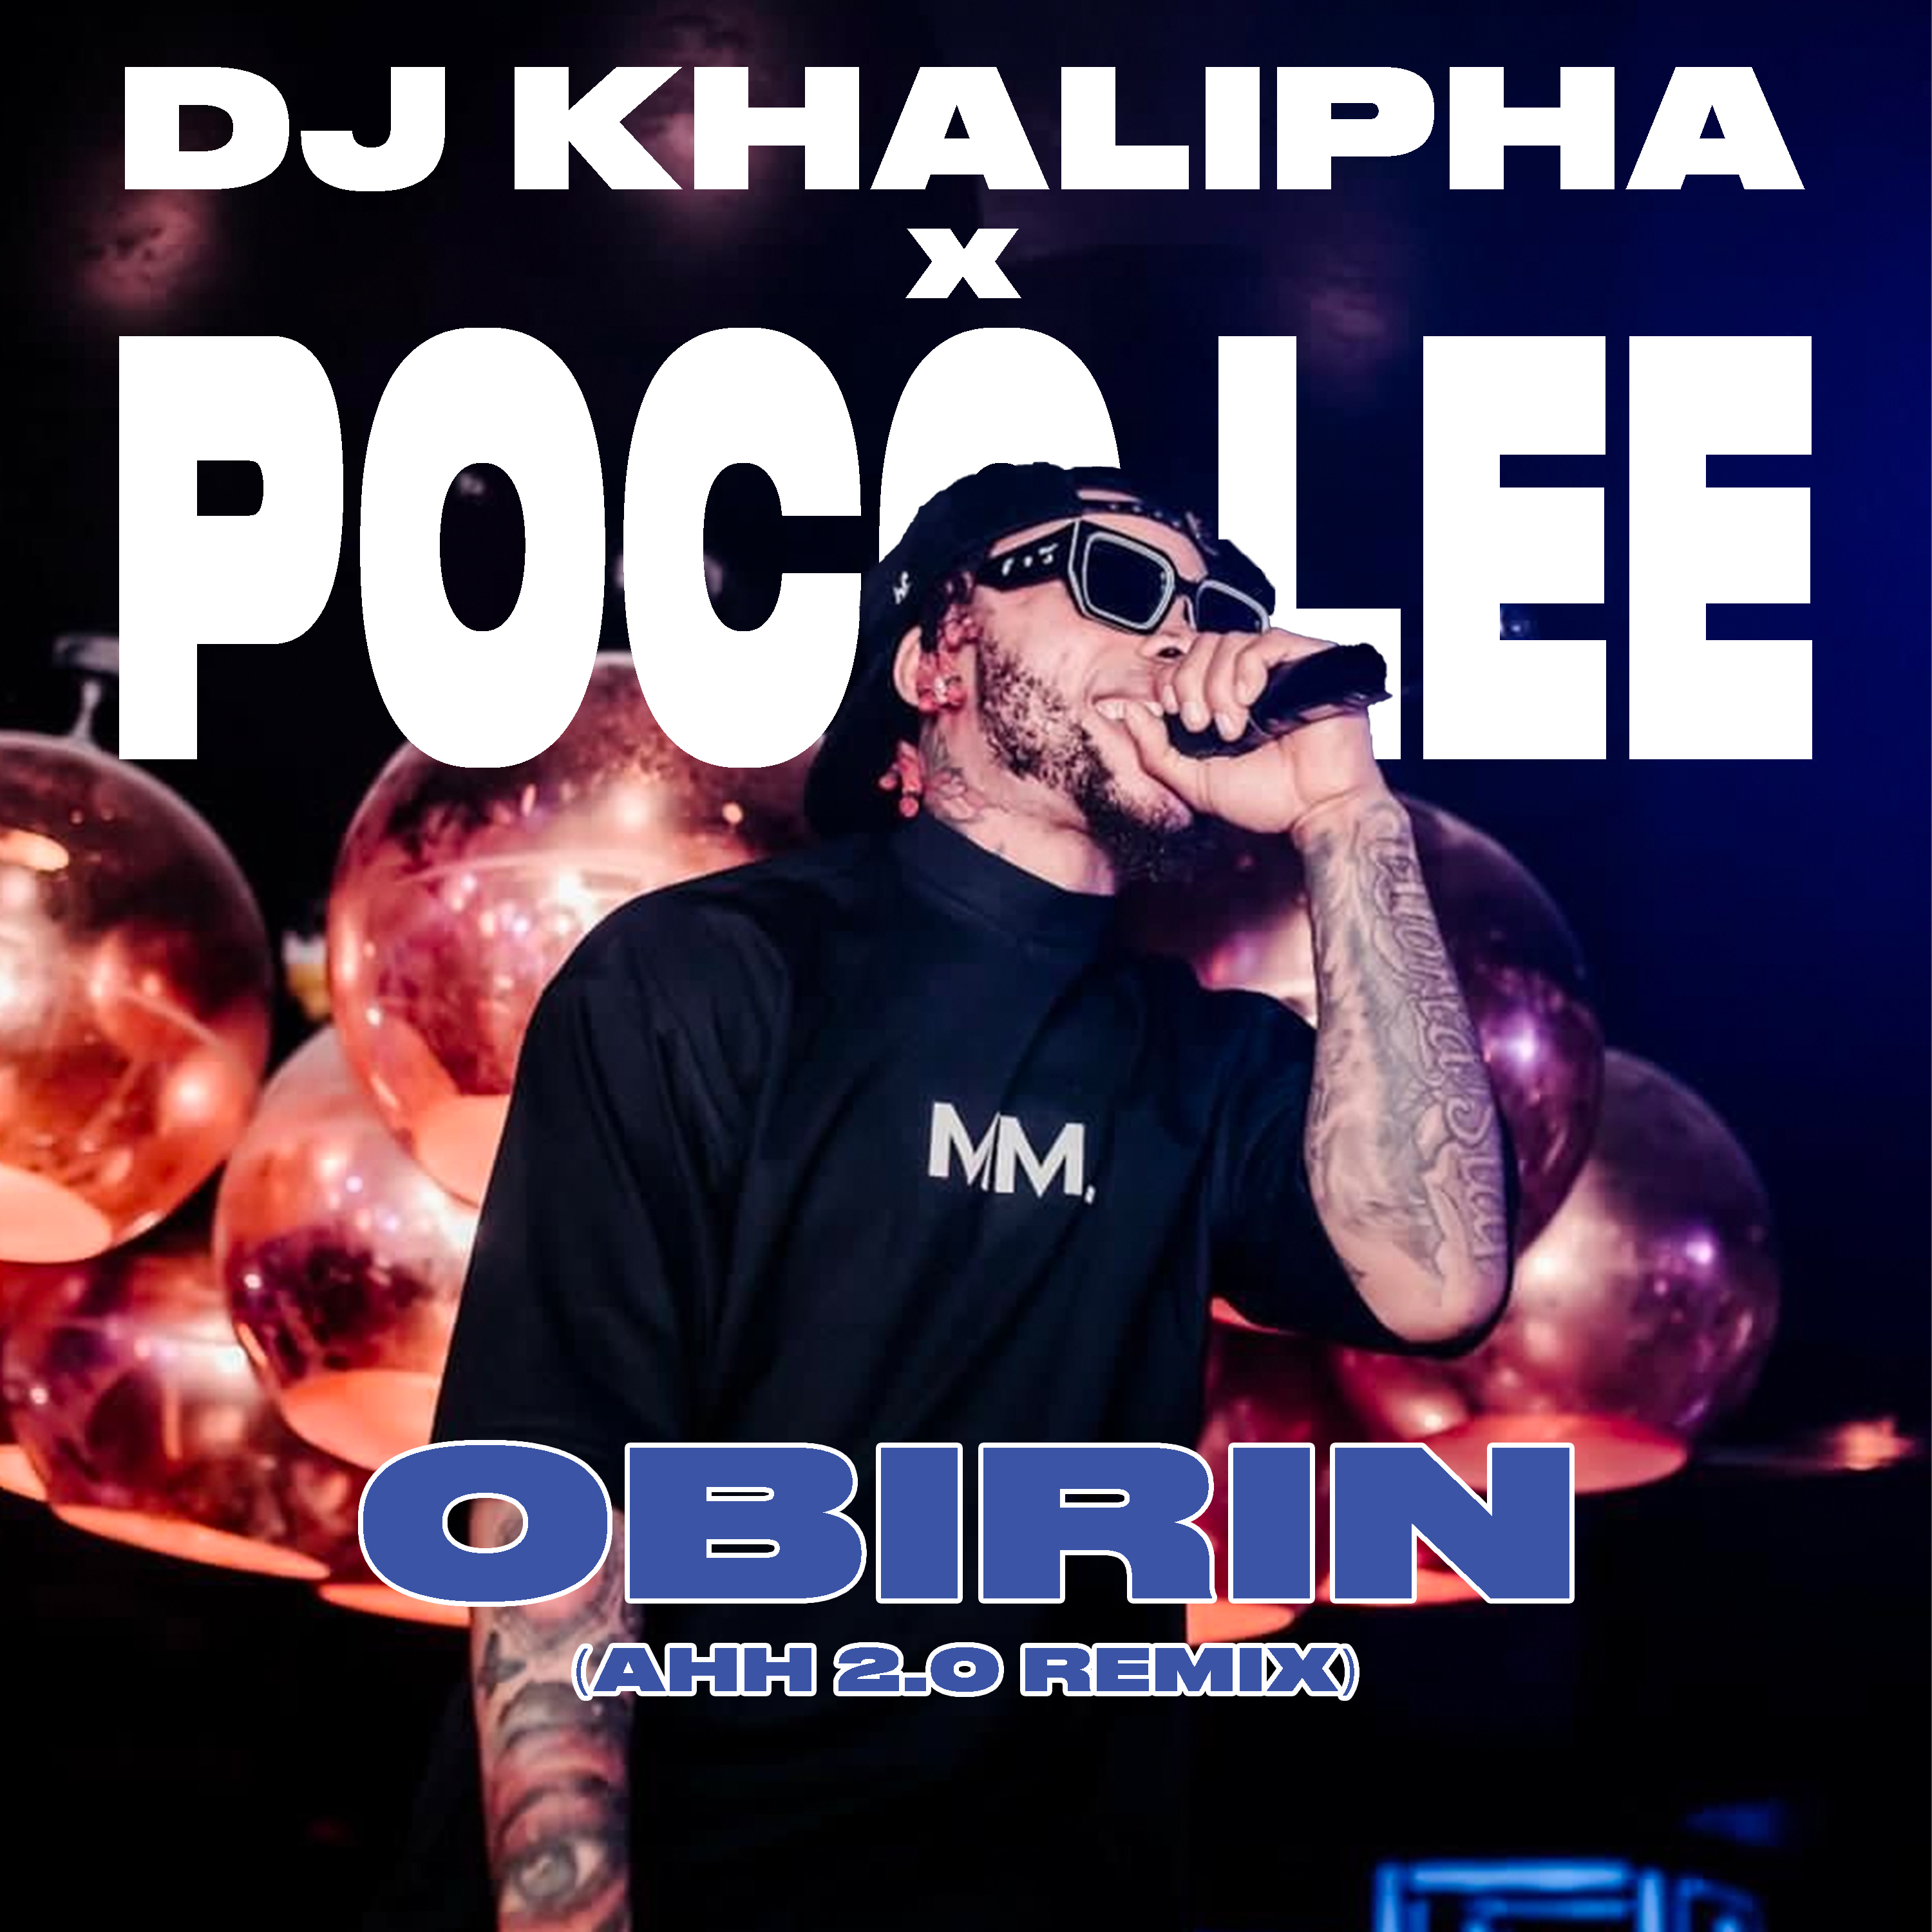 Poco Lee - Obirin Ahhh 2.0 (Remix) Ft. DJ Khalipha